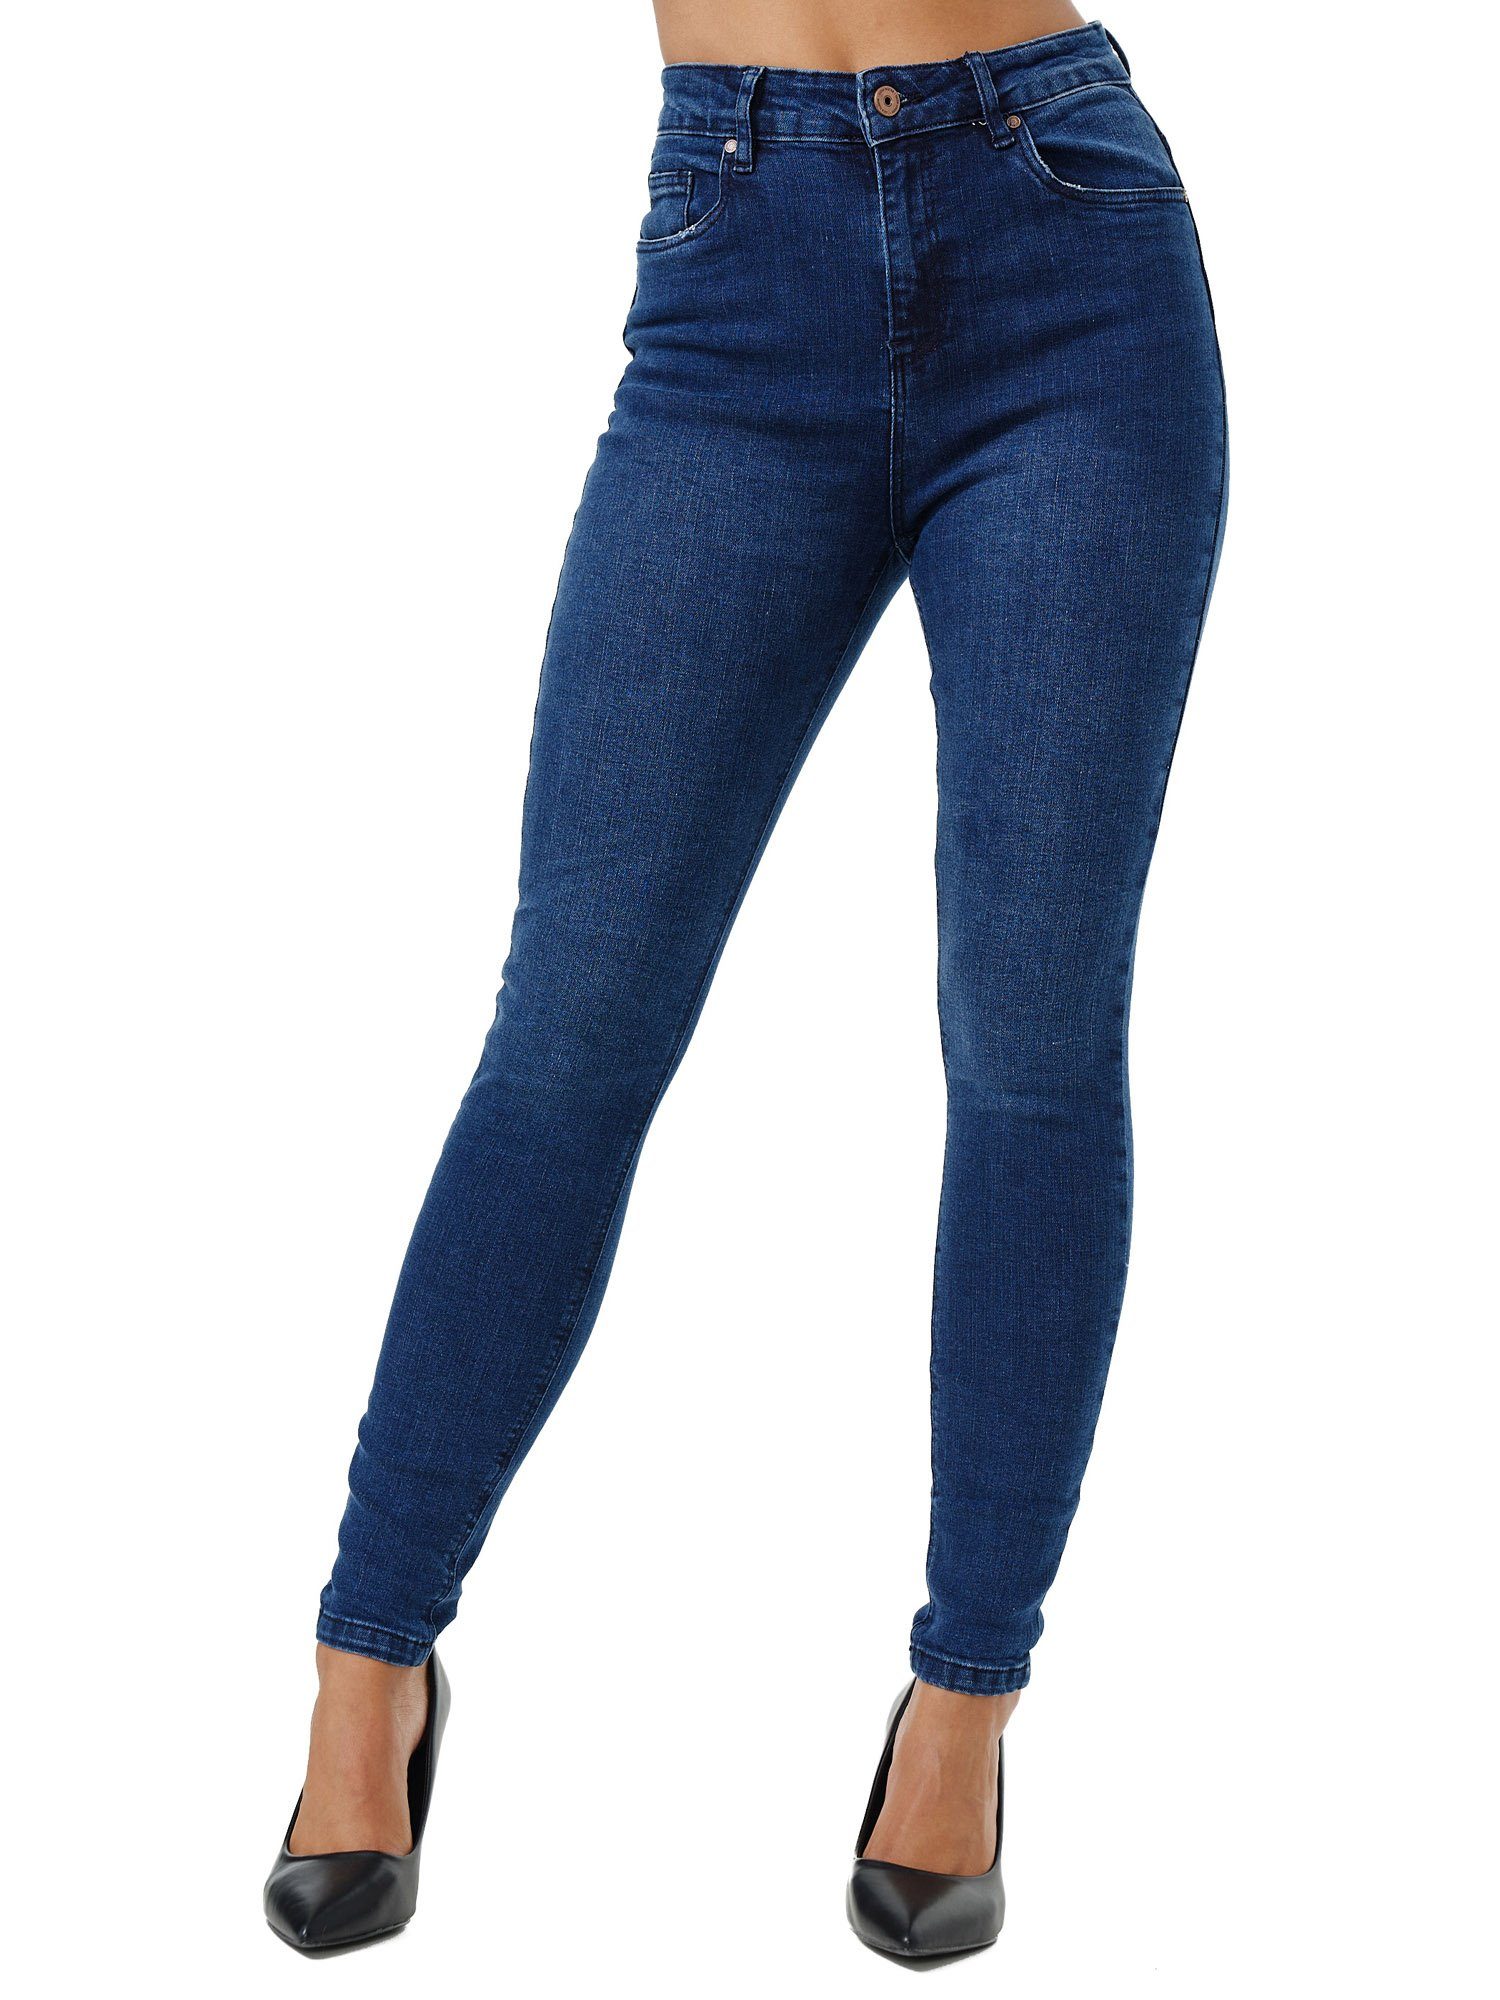 Damen Bekleidung Jeans Jeans mit gerader Passform SJYP Denim Jeanshose in Blau 